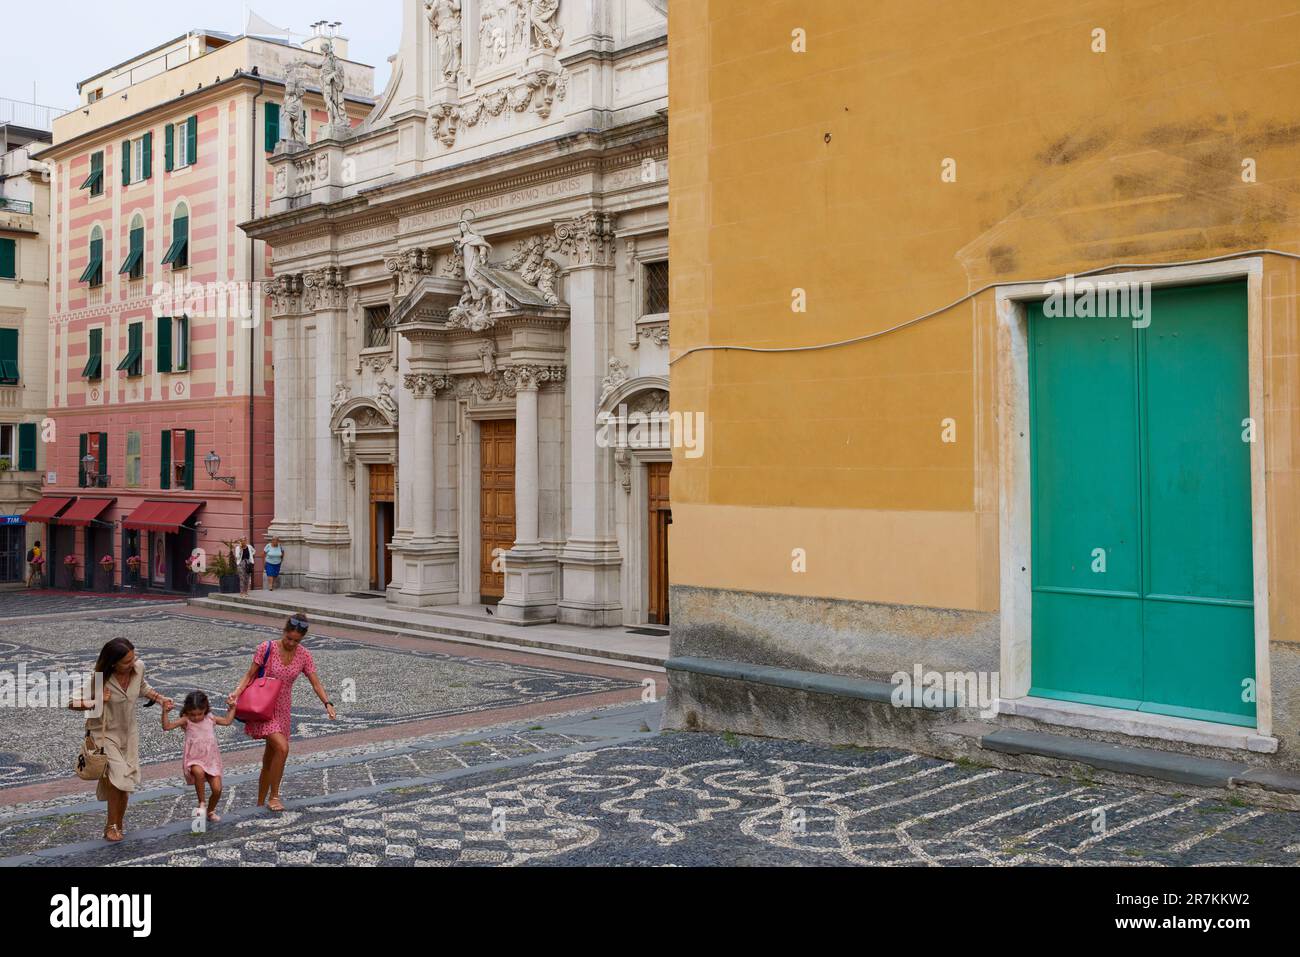 People walking through Piazza Sant'Ambrogio, Varazze, Liguria, Italy Stock Photo